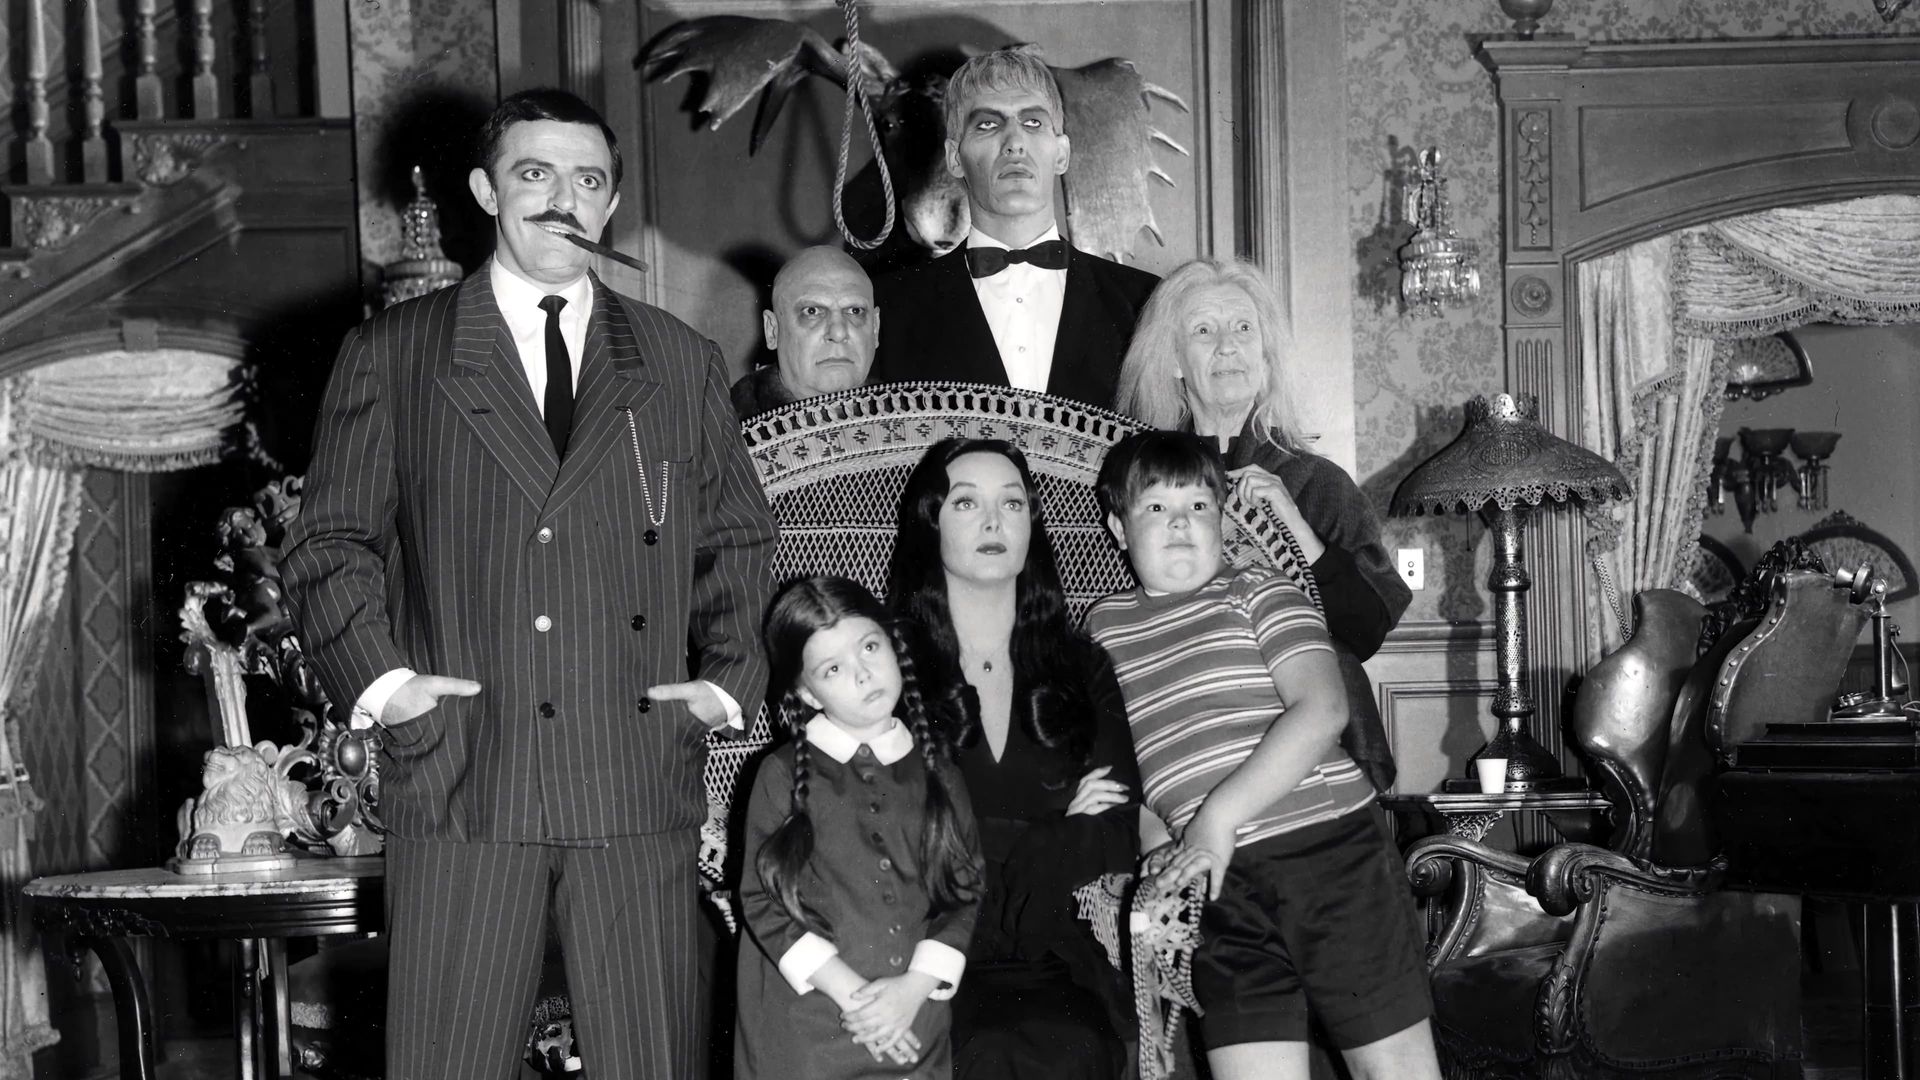 The Addams Family Backdrop